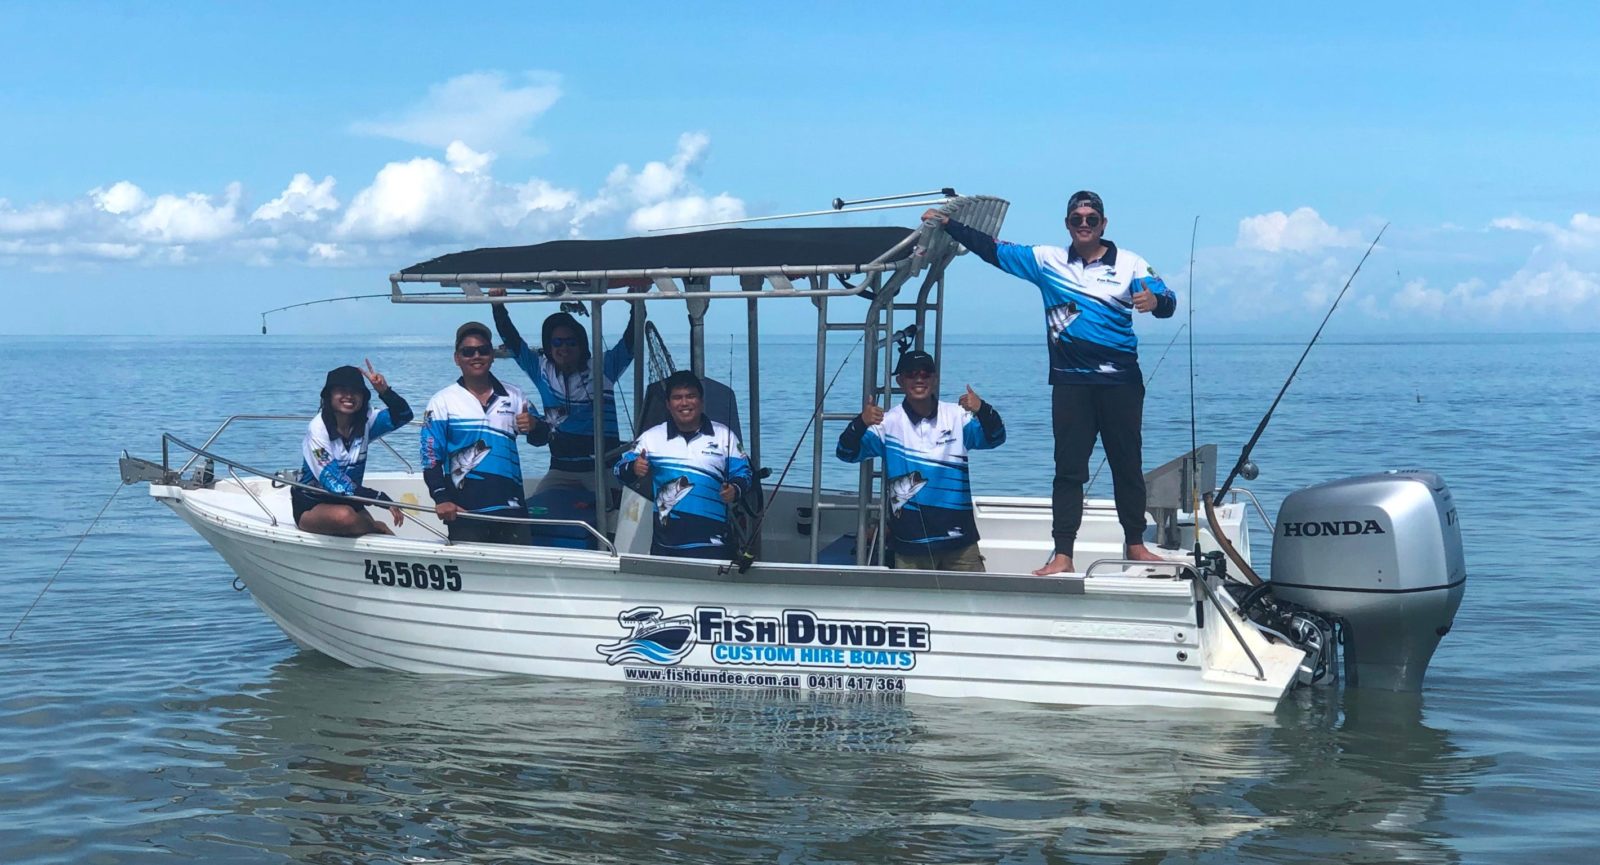 Darwin boat hire specialists